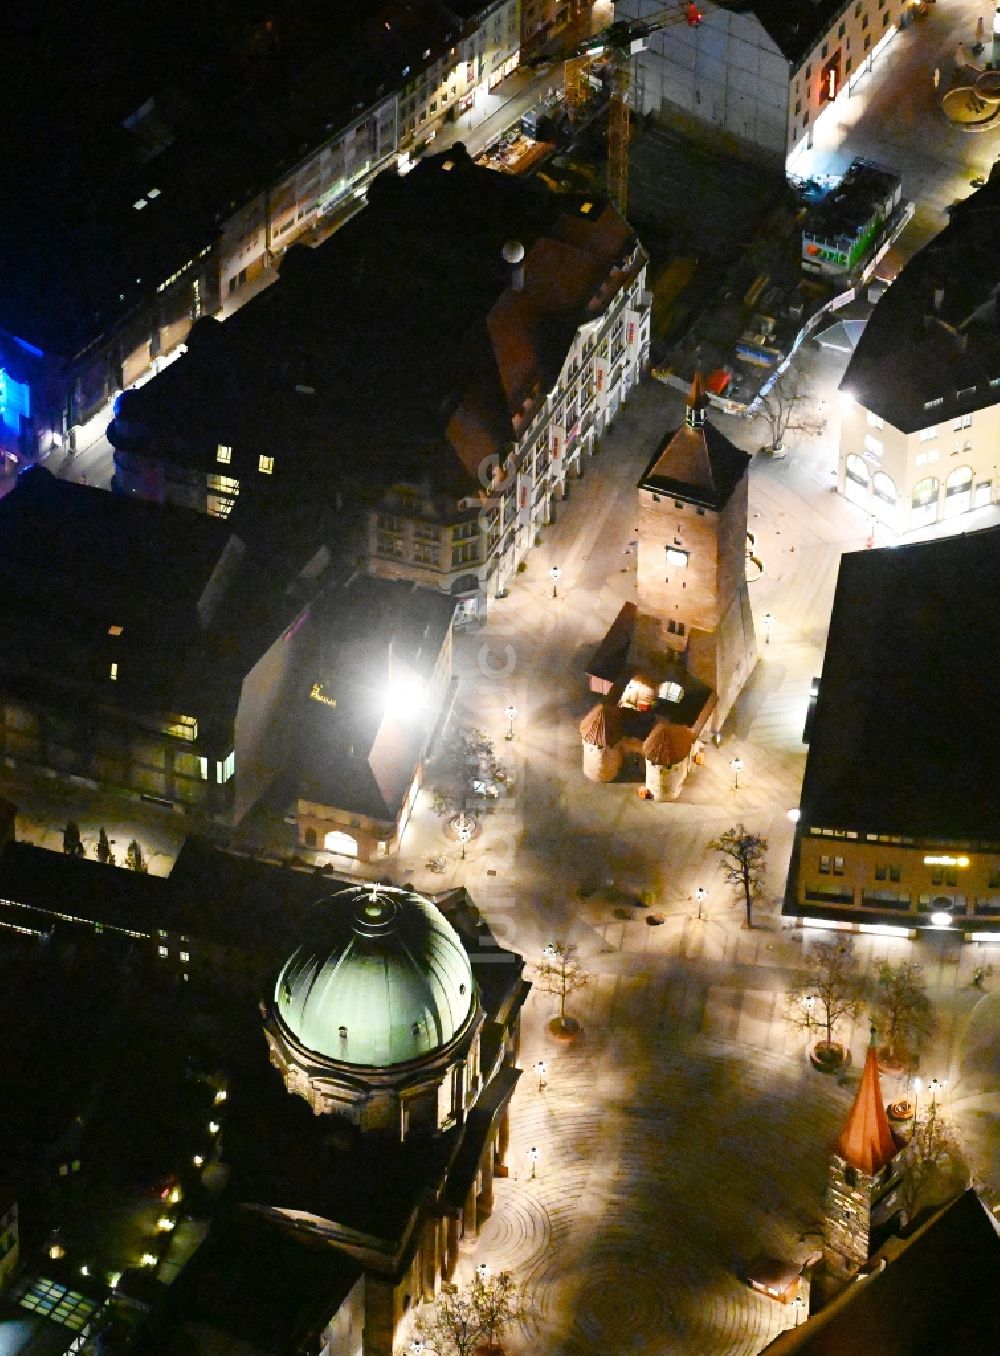 Nacht-Luftaufnahme Nürnberg - Nachtluftbild Turm- Bauwerk Weißer Turm in Nürnberg im Bundesland Bayern, Deutschland